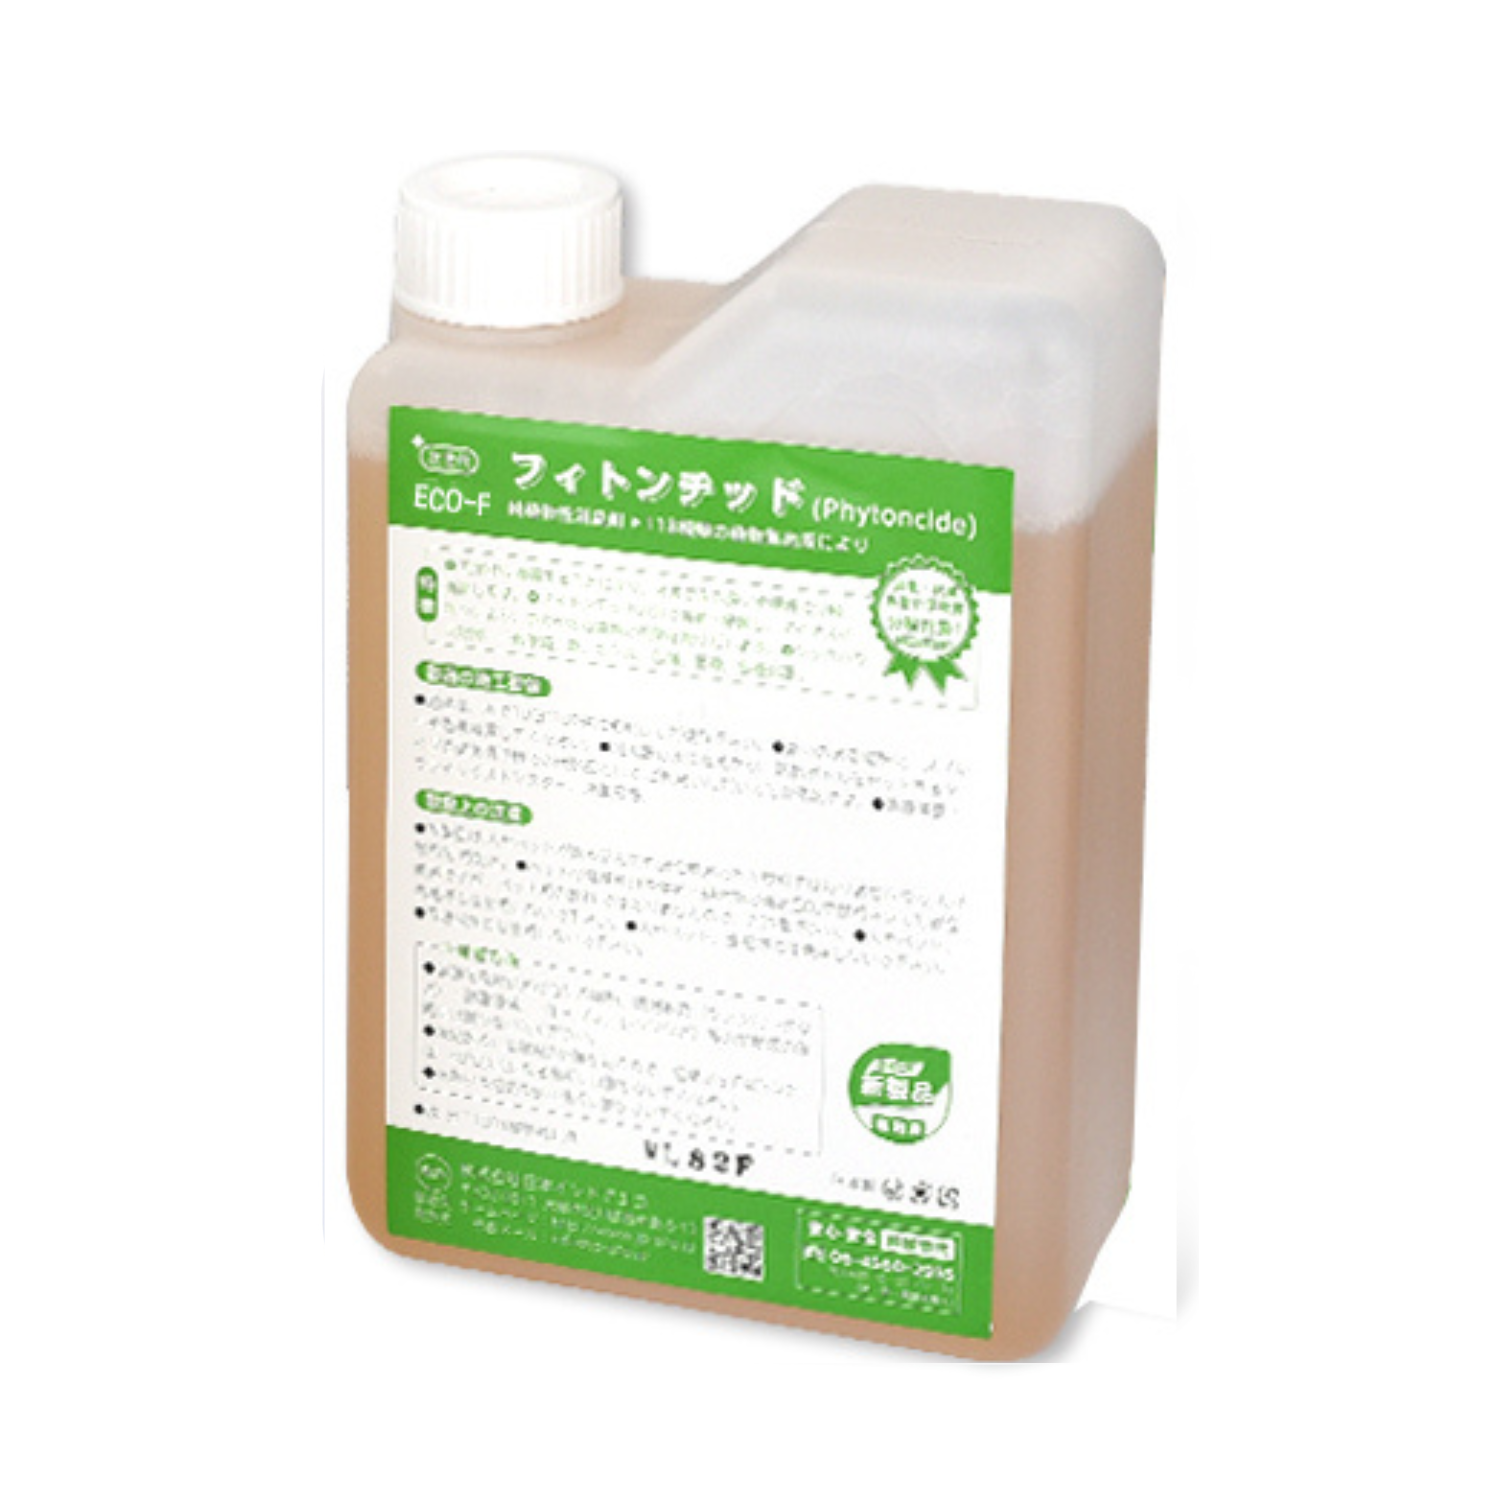 JP-ECO [Japanese Original] ECO-F Photocatalyst Phytondofine Air Freshener (1kg) Formaldehyde Scavenger Indoor Deodorization Deodorization Indoor Treatment In addition to Pet Odor